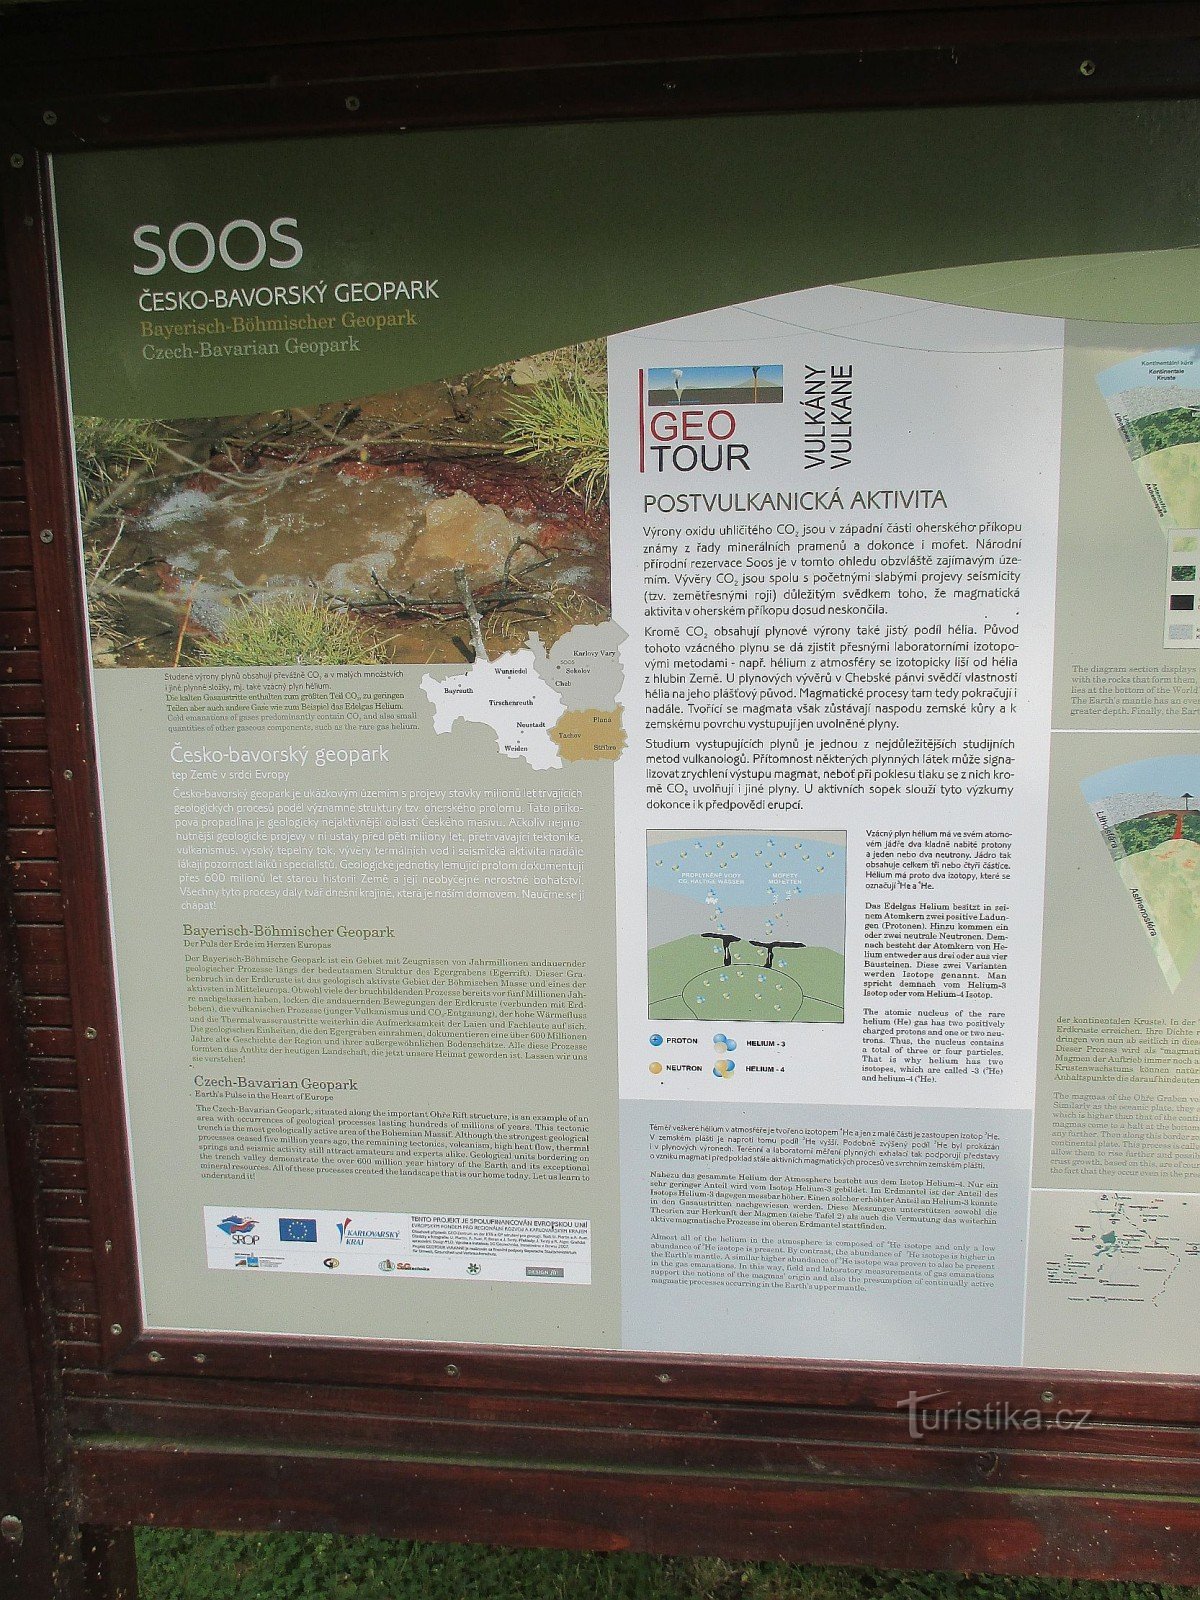 Lehrpfad des SOOS National Nature Reserve